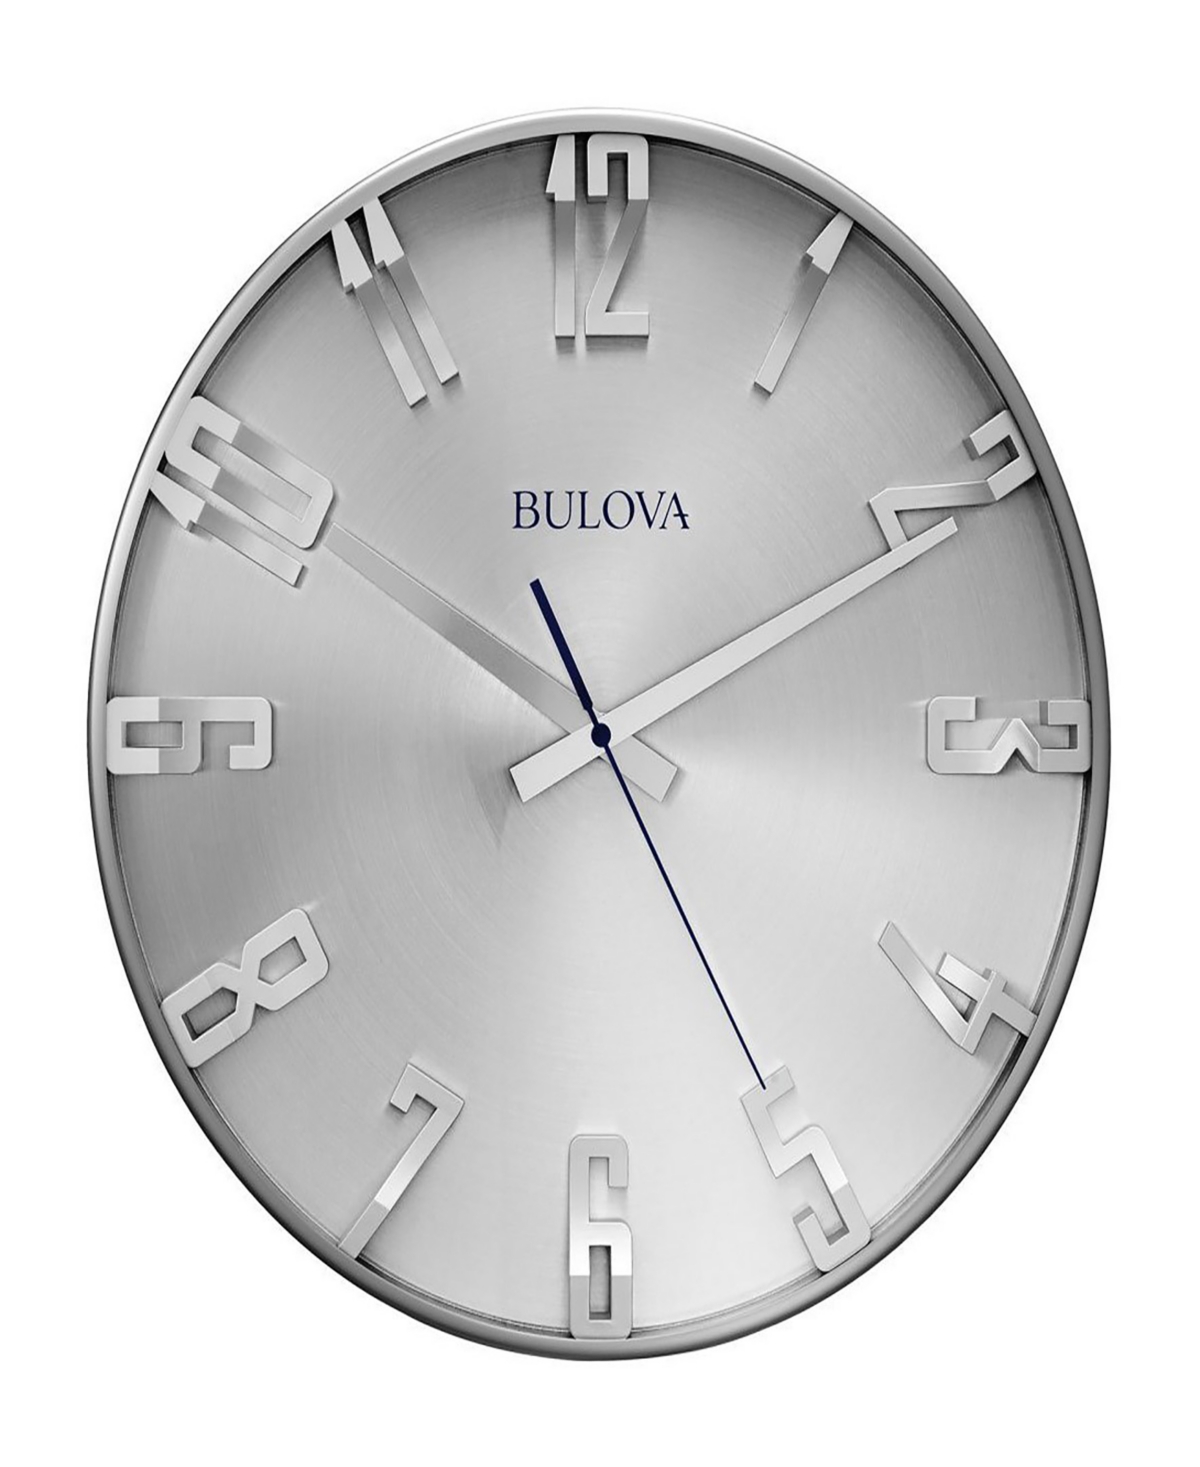 Bulova Model C4846 Director Clock